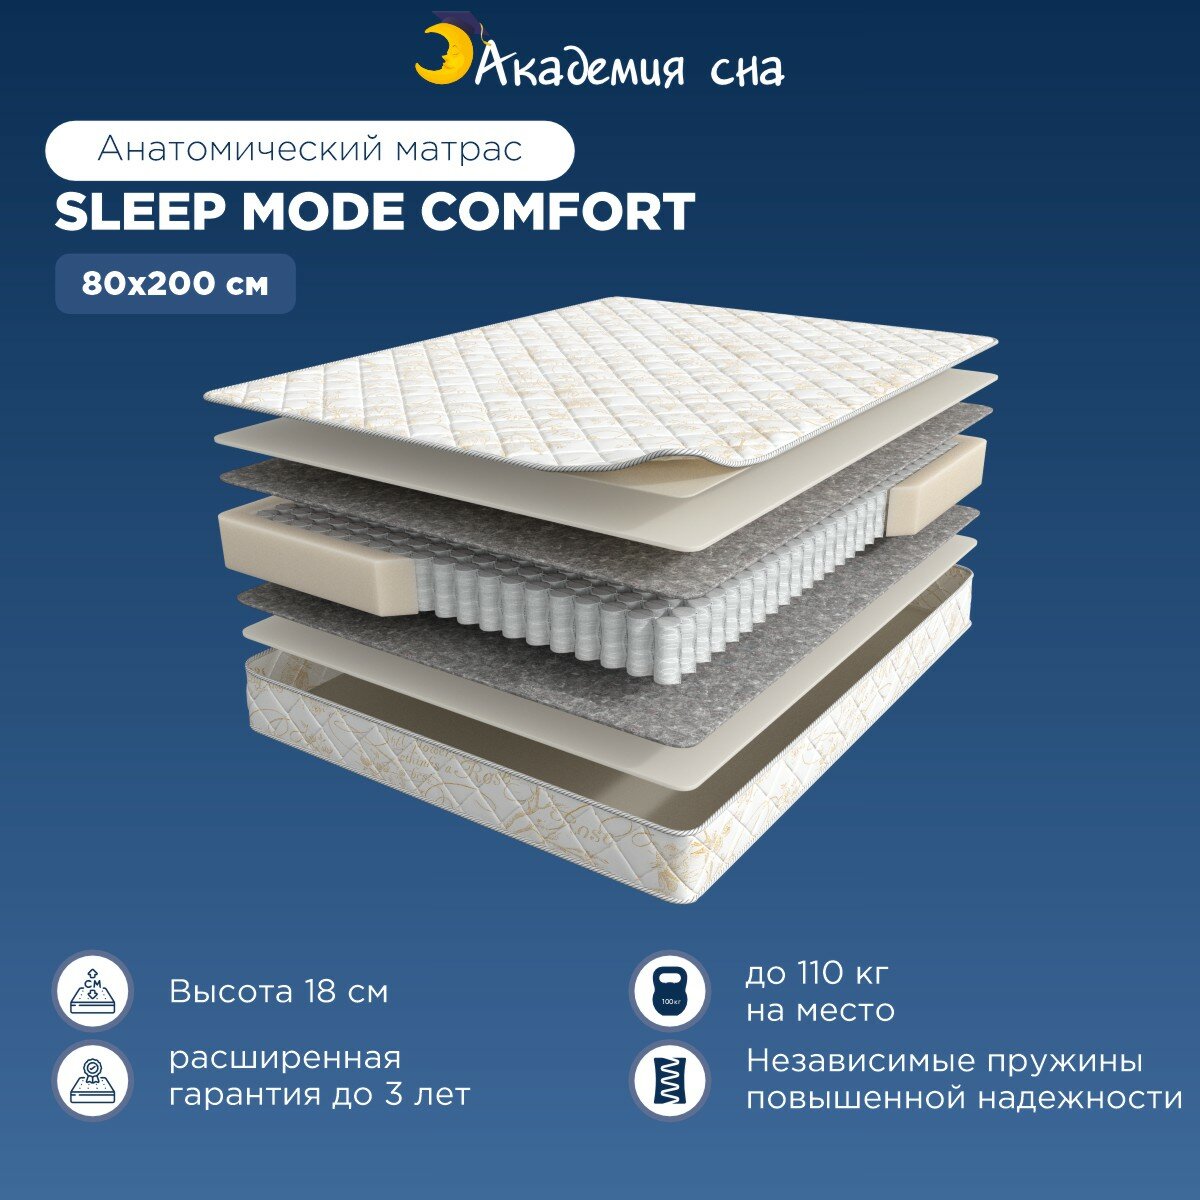 Матрас Академия Сна Sleep Mode Comfort 80x200